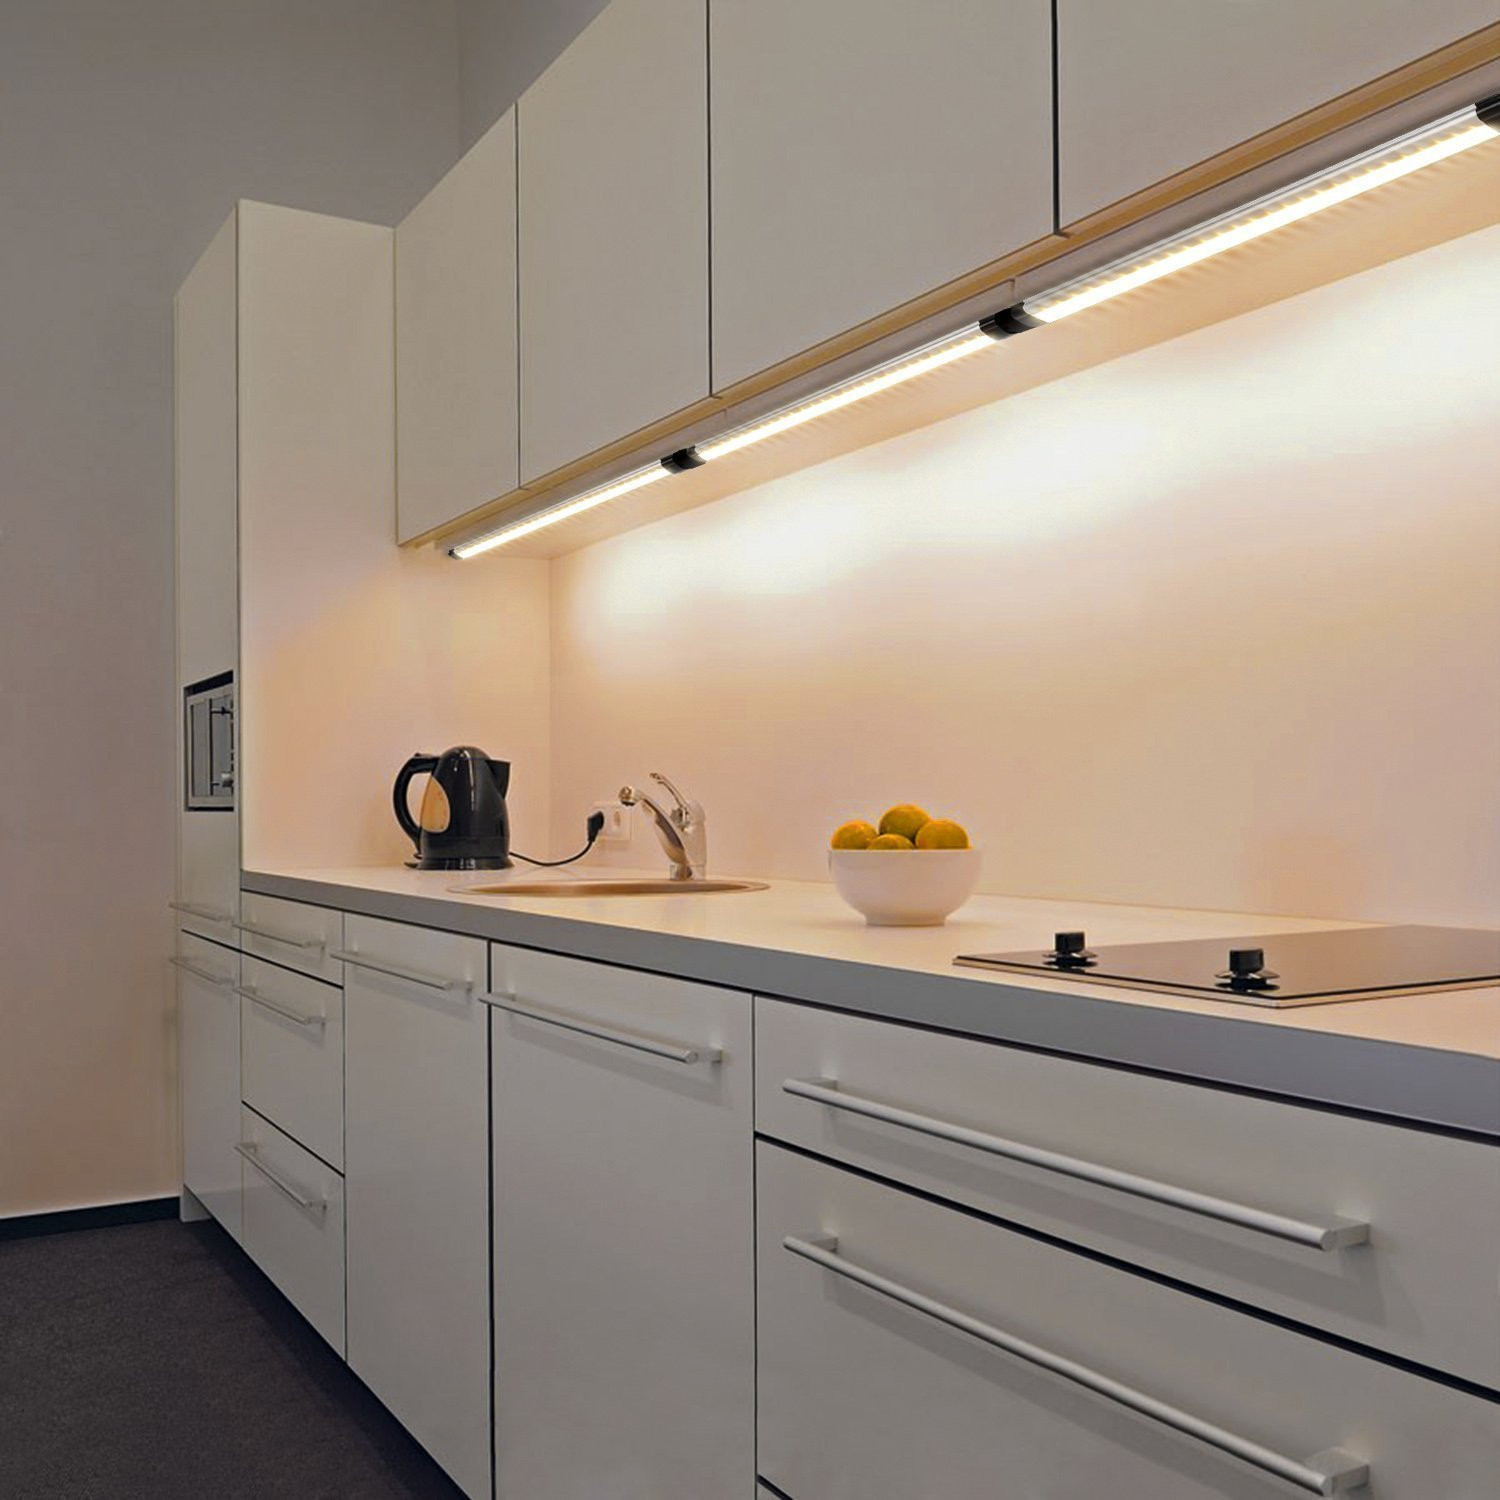 Kitchen Led Lights Under Cabinet
 Galleon Albrillo LED Under Cabinet Lighting Dimmable